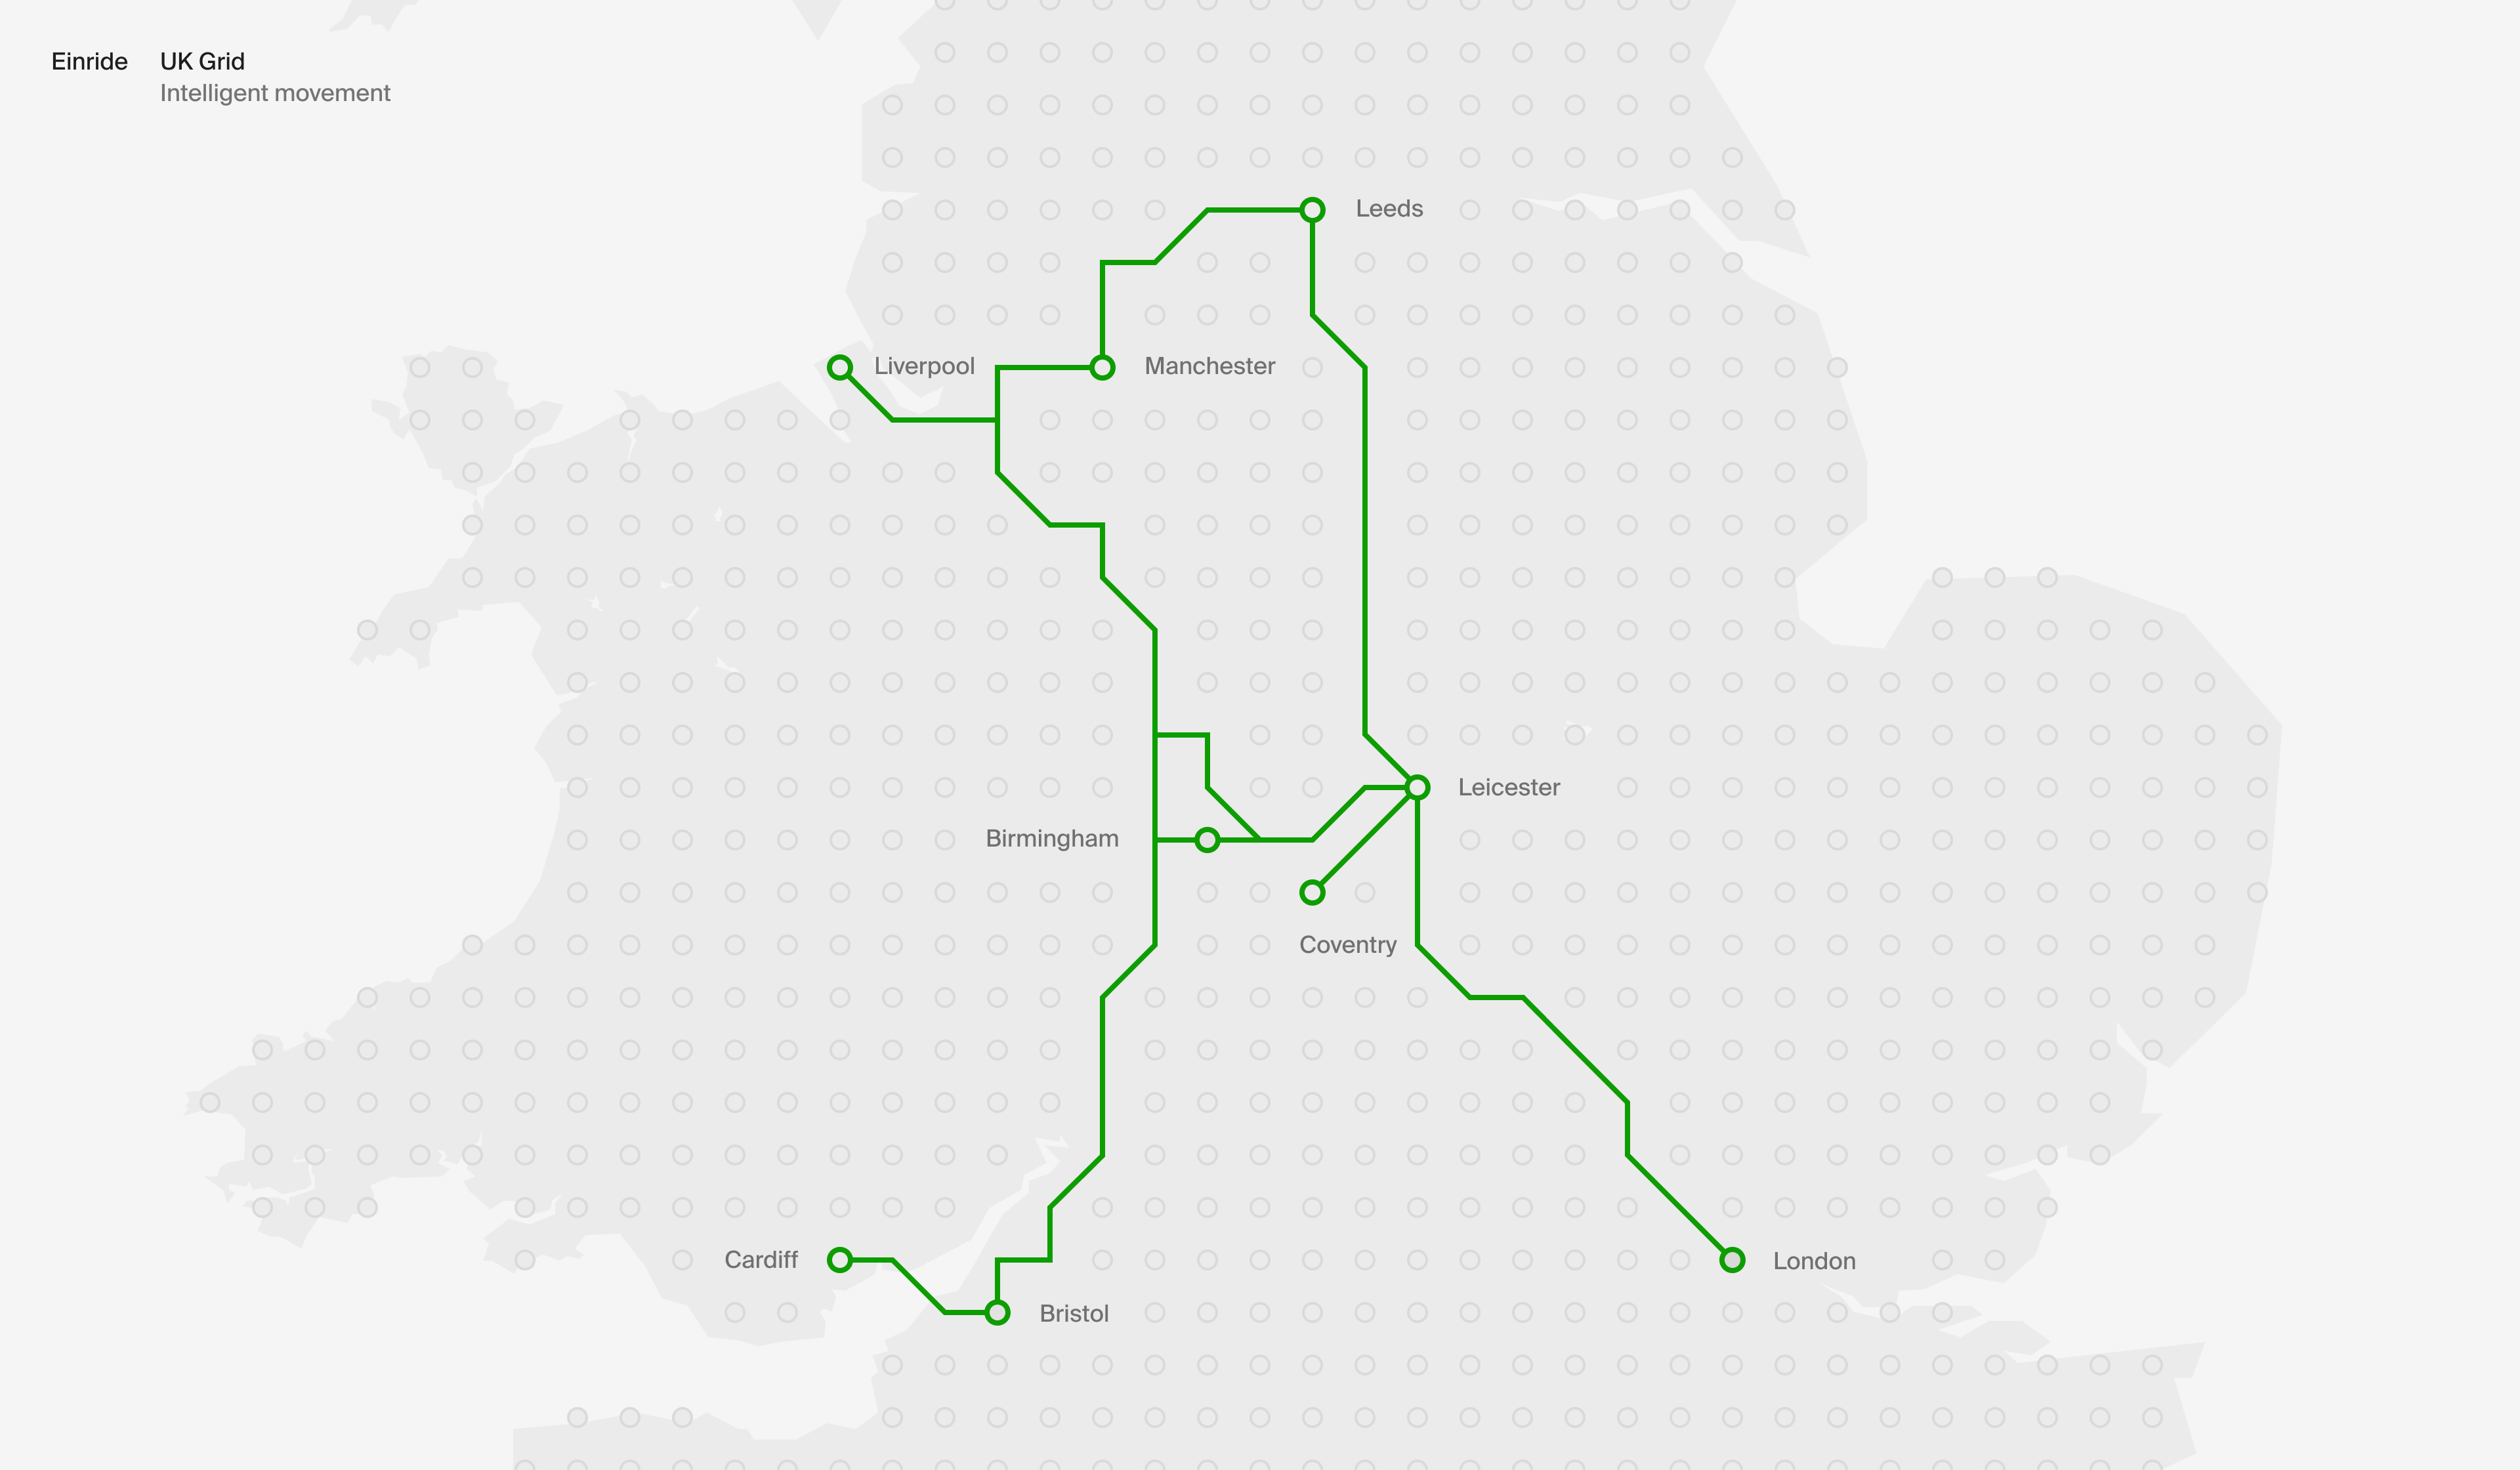 Einride's planned transport grid grid